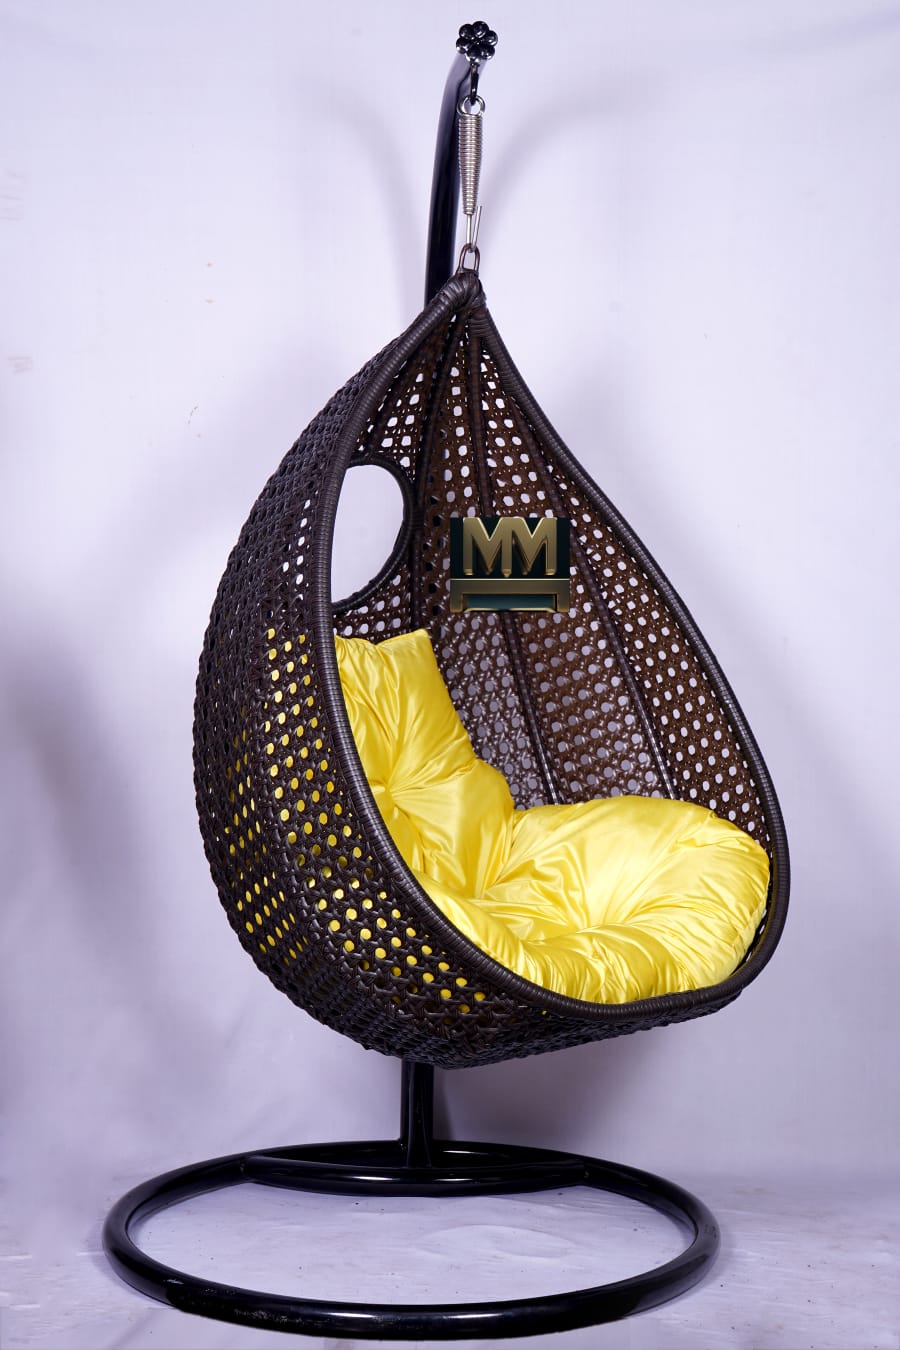 MM Furniture - Latest update - Swinging Chair Manufacturers Near Bommasandra